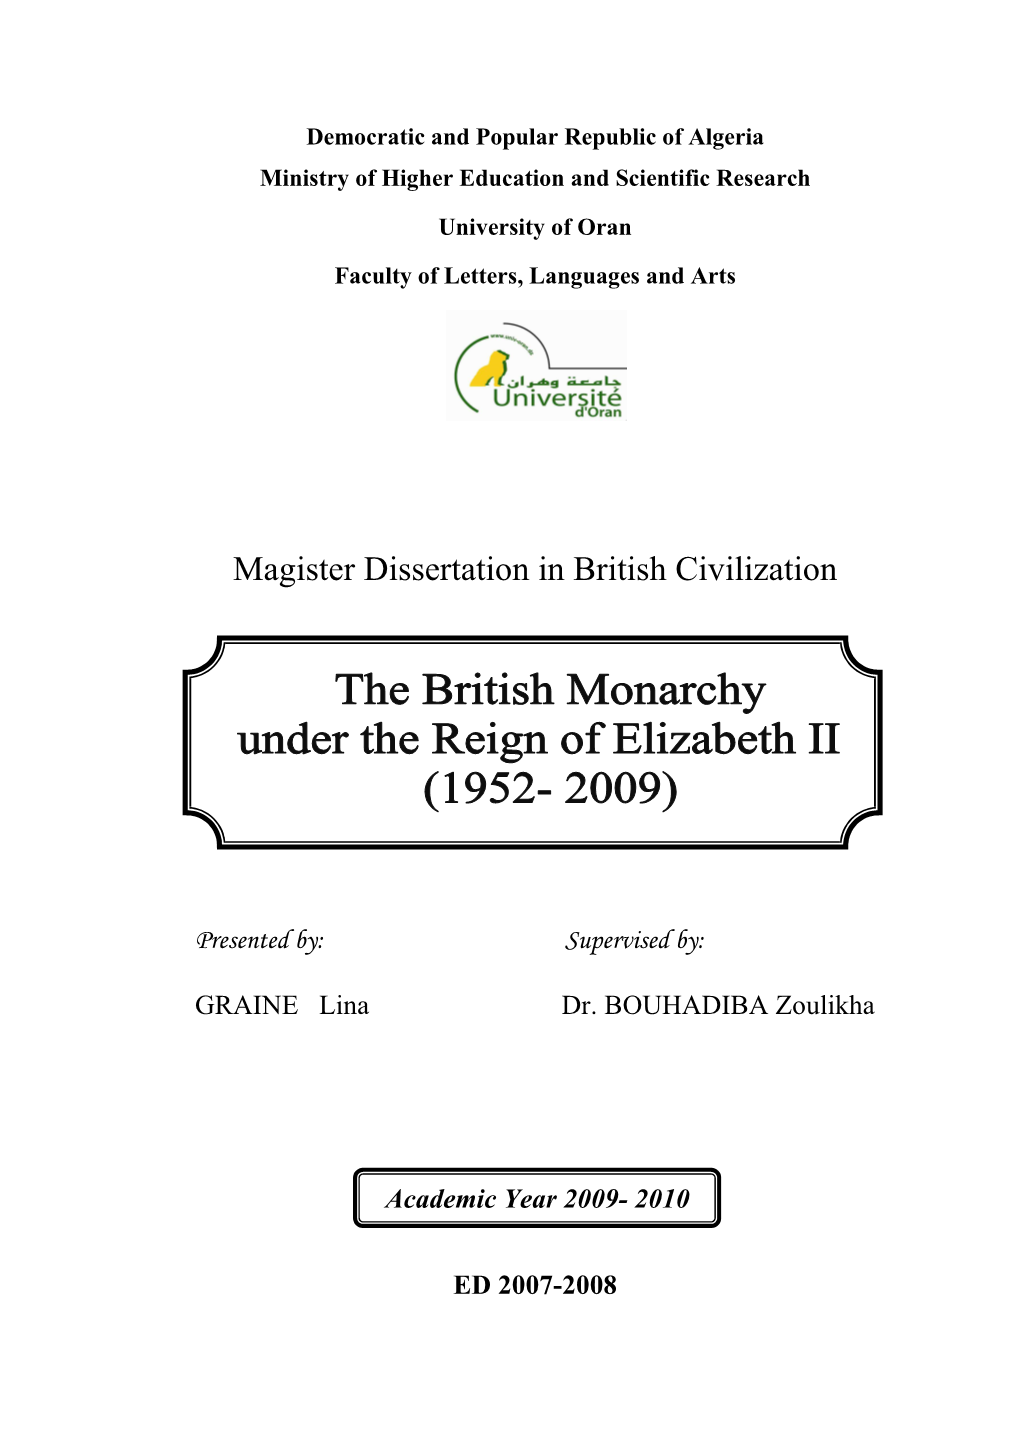 Magister Dissertation in British Civilization